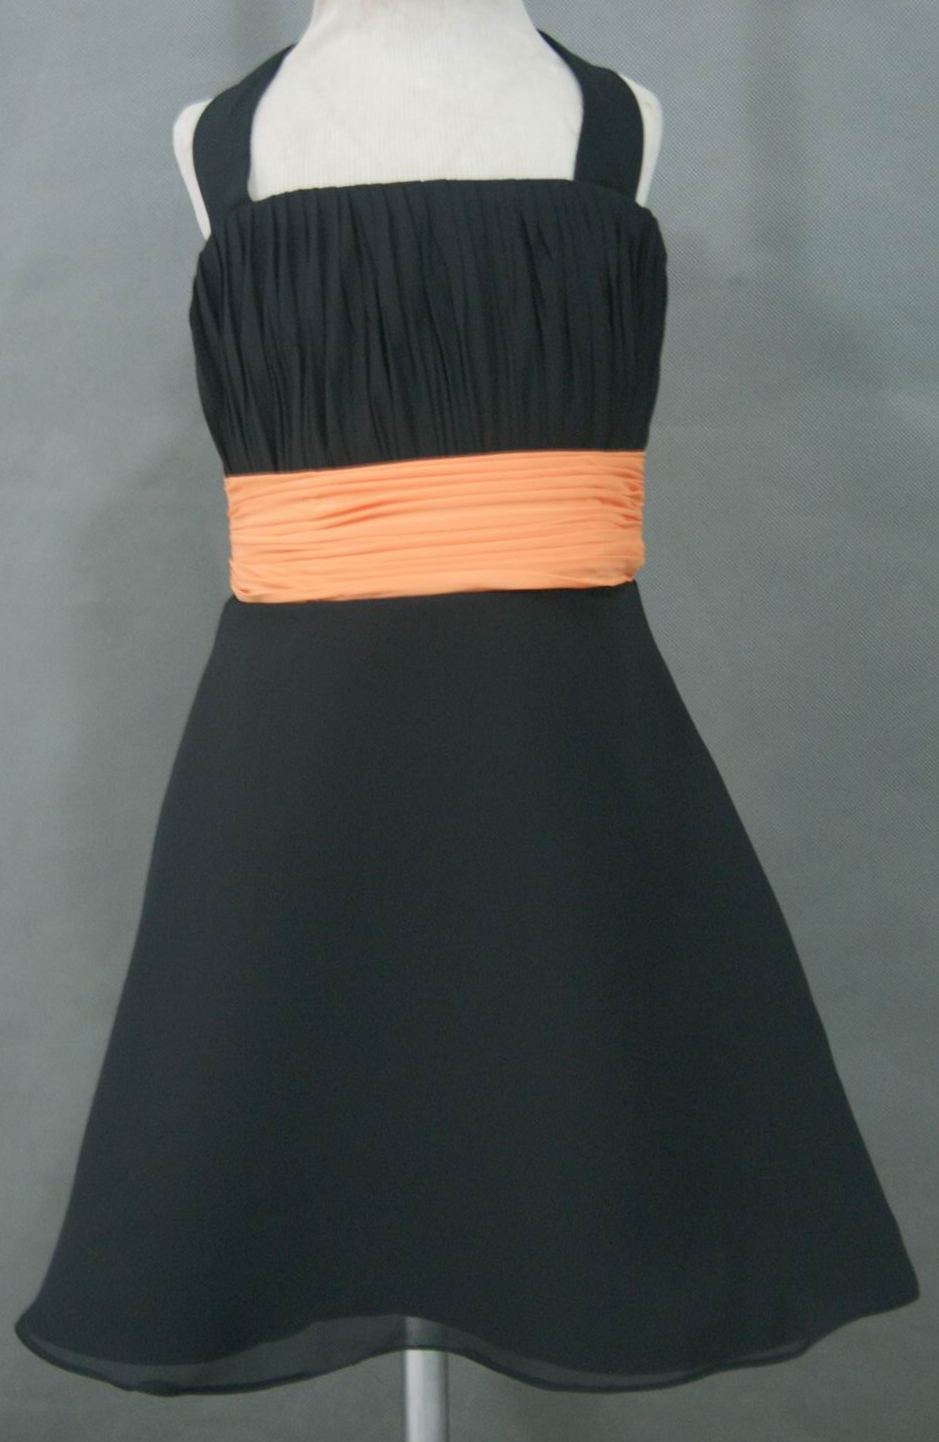 black chiffon dress with tangerine